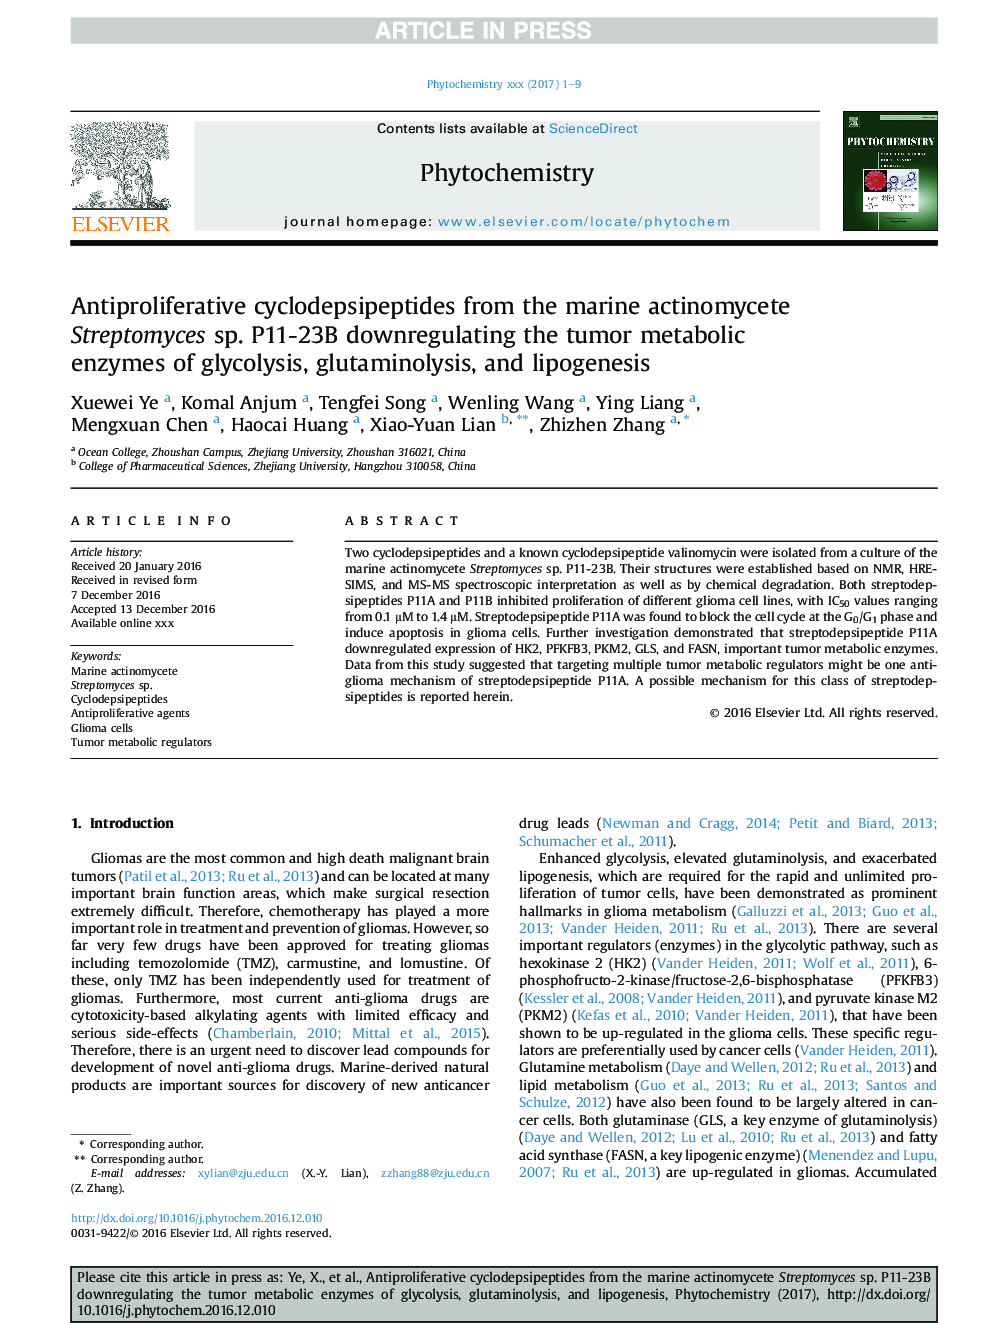 Antiproliferative cyclodepsipeptides from the marine actinomycete Streptomyces sp. P11-23B downregulating the tumor metabolic enzymes of glycolysis, glutaminolysis, and lipogenesis